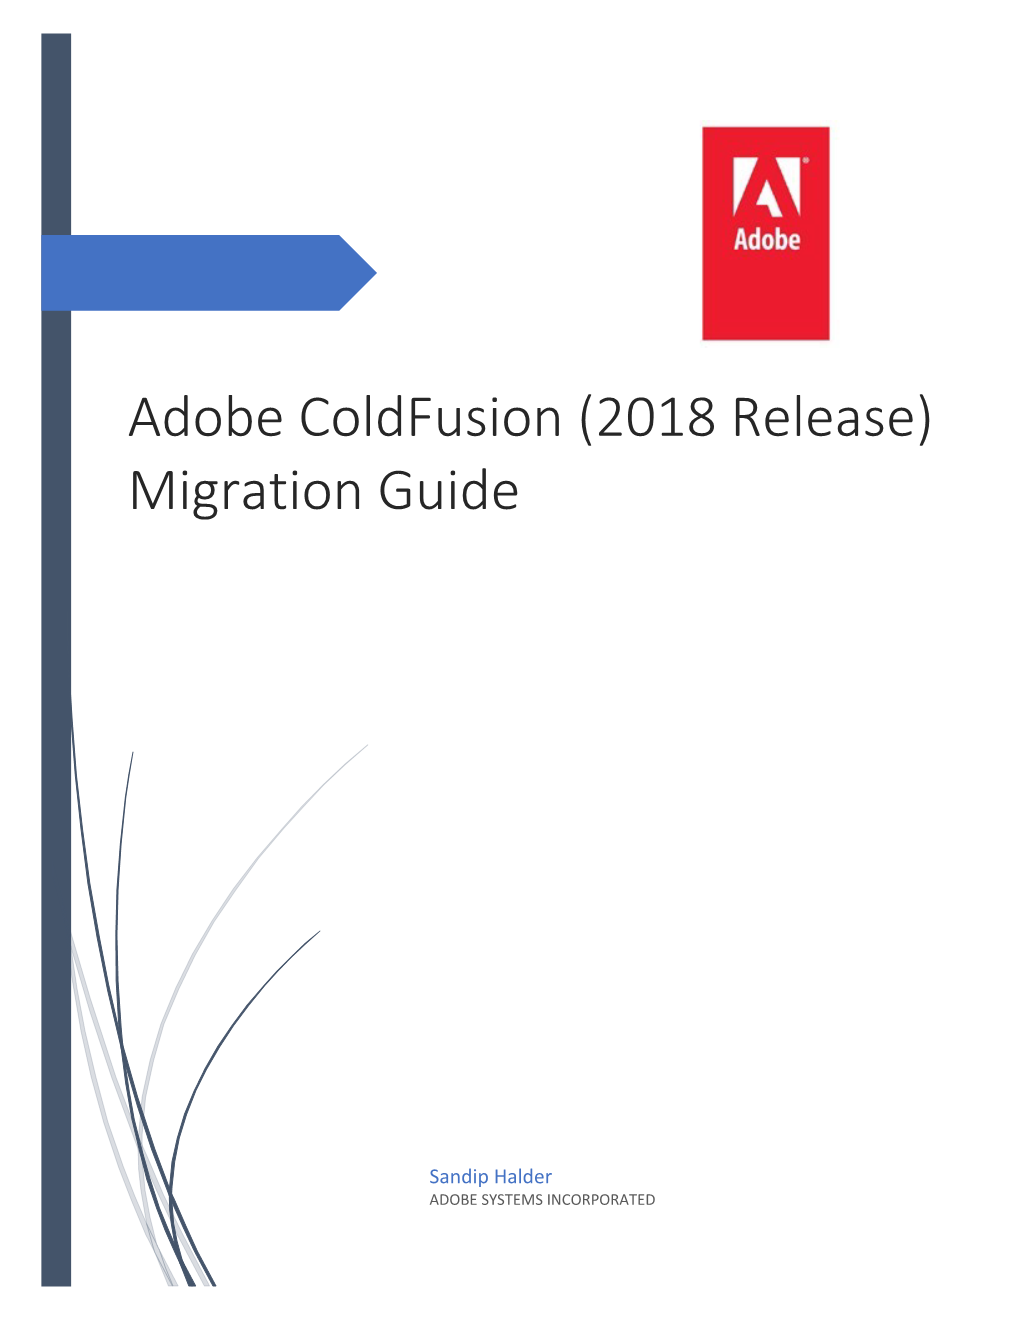 Adobe Coldfusion (2018 Release) Migration Guide